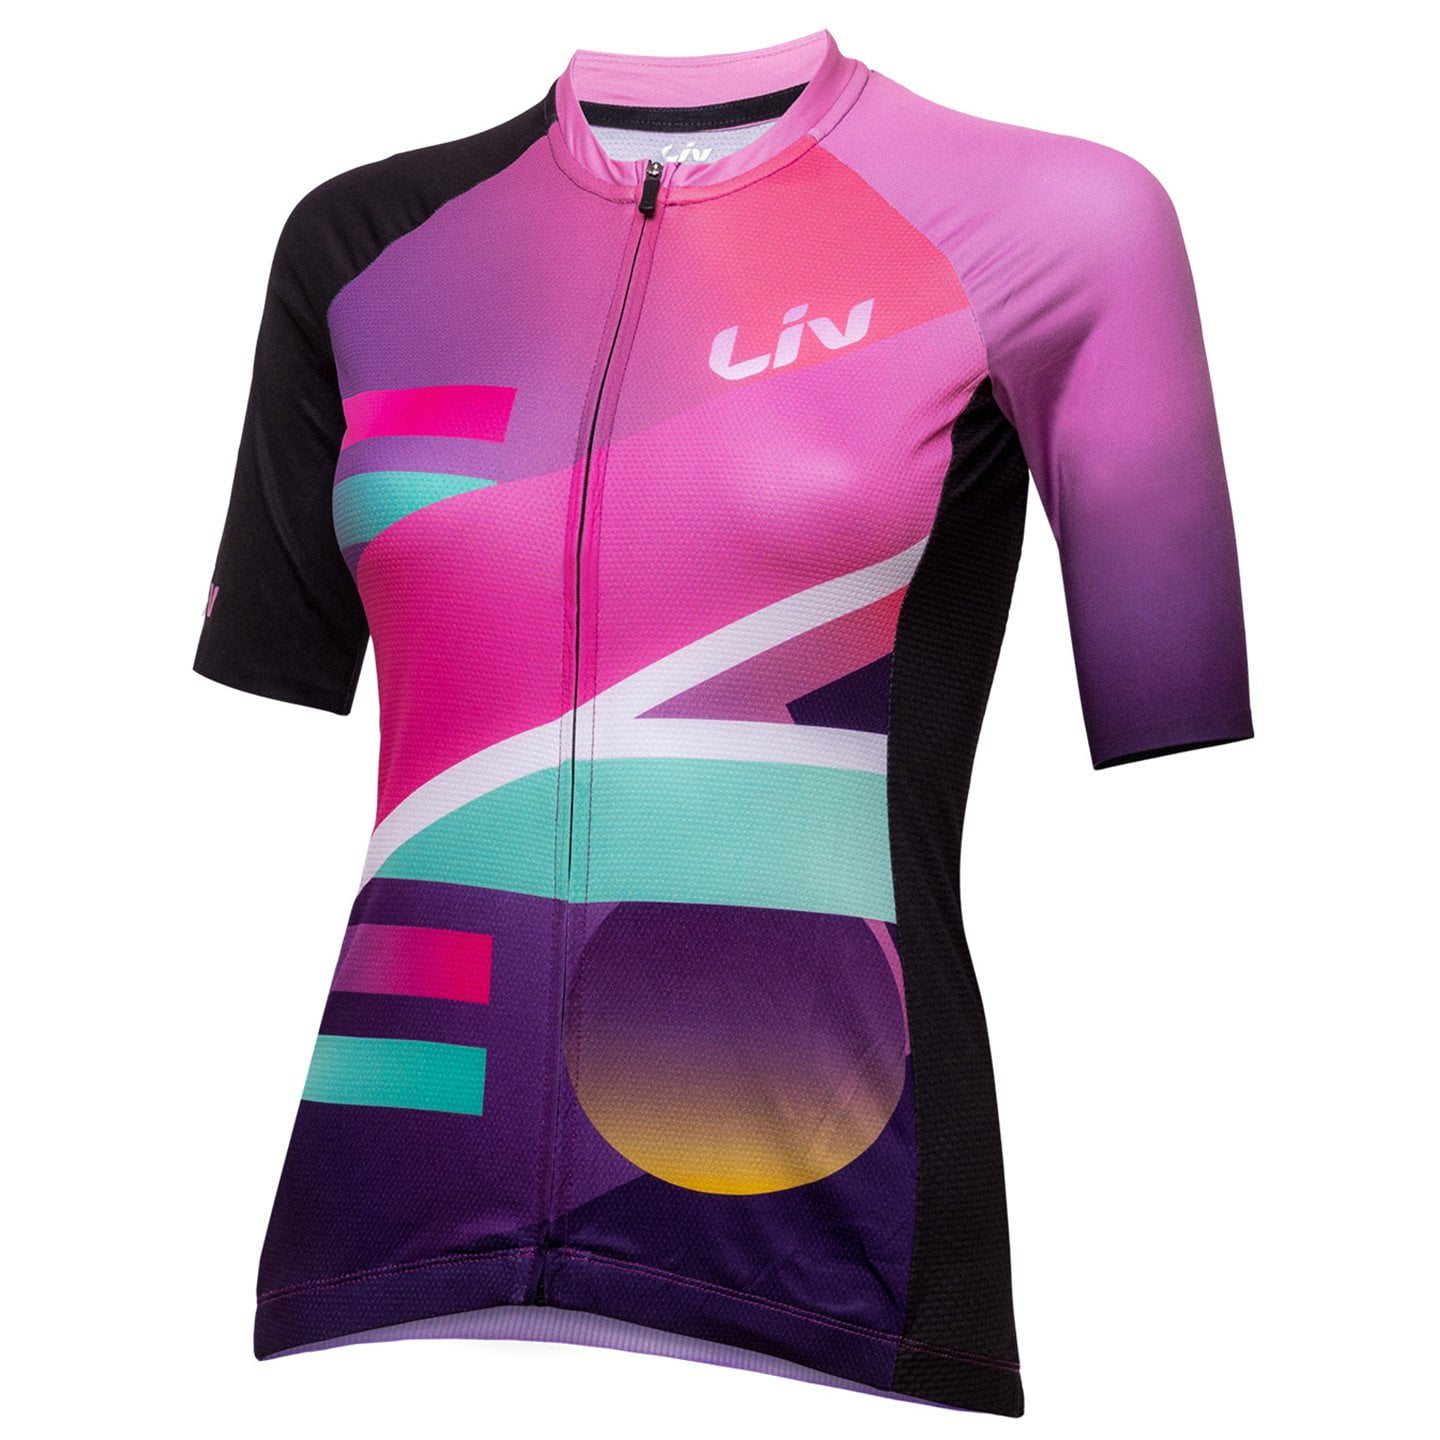 LIV Aspect Women’s Jersey Women’s Short Sleeve Jersey, size XL, Cycle jersey, Bike gear